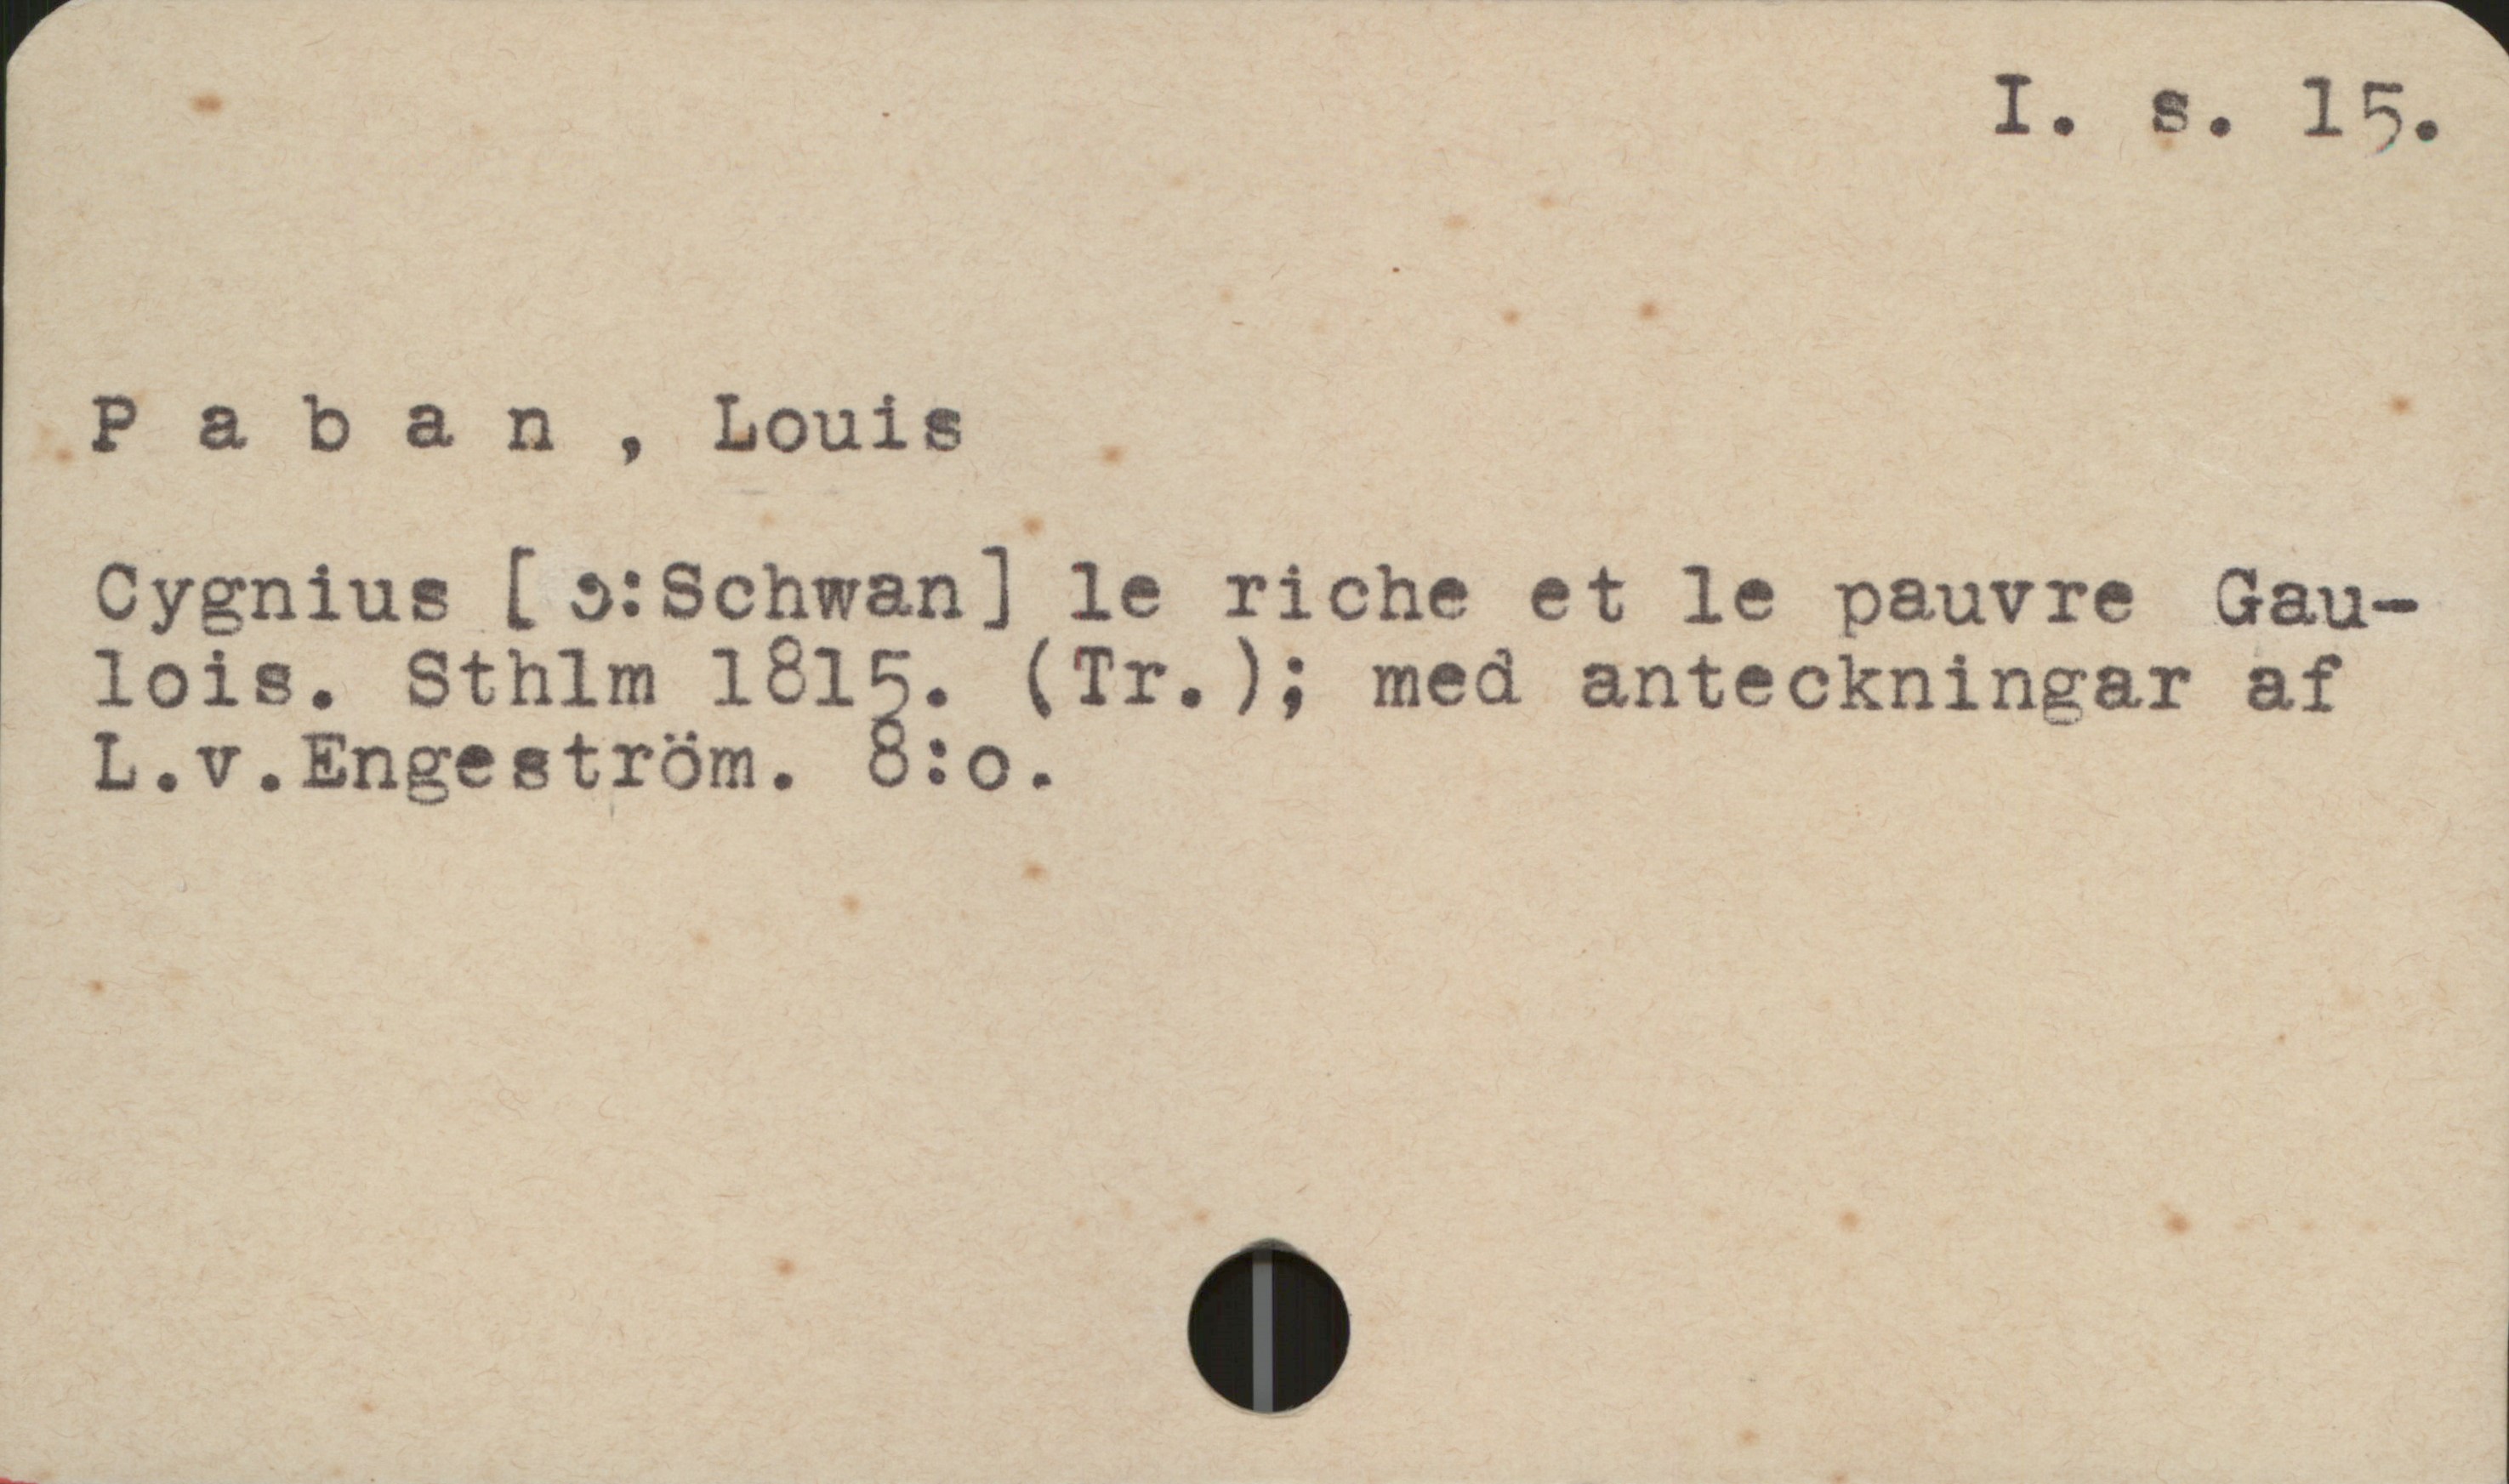 Paban, Louis I.s.15.
Paban, Louis
Cygnius [9:Schwan] le riche et le pauvre Gaulois. Sthlm 1815. (Tr.); med anteckningar af
L.v. Engeström. 8:o.